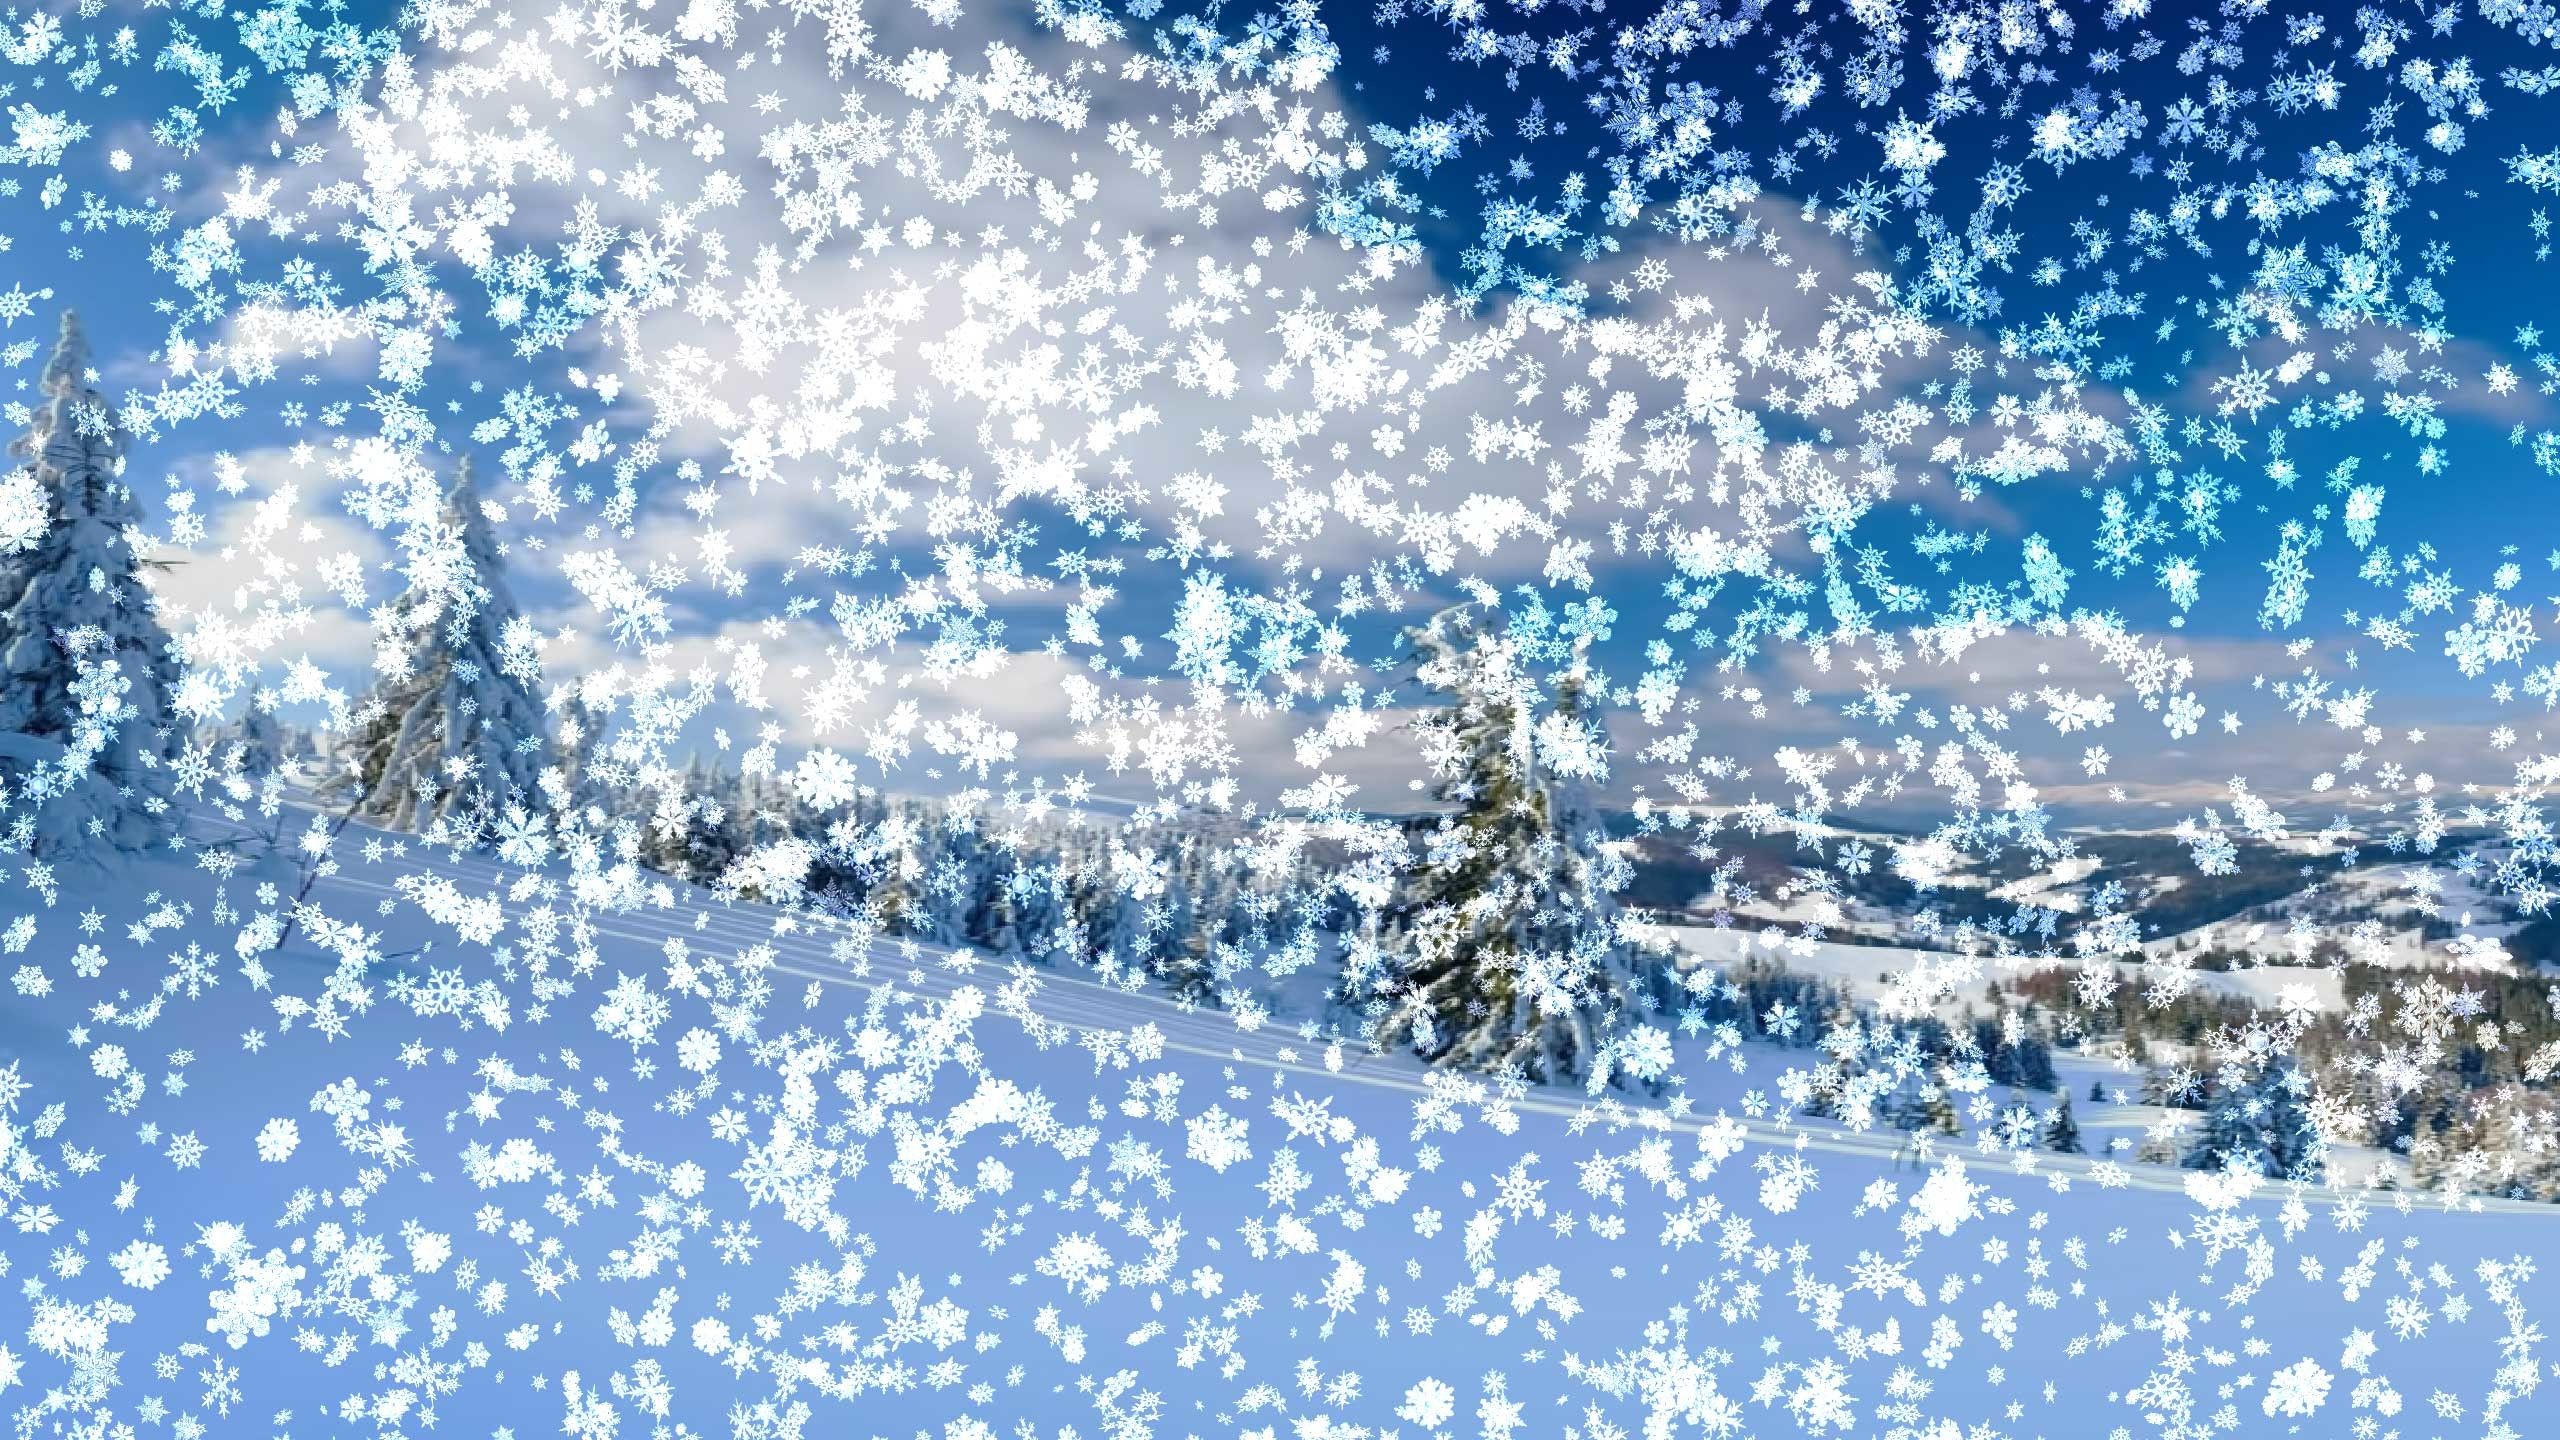 Snow Falling Christmas Wallpaper Moving